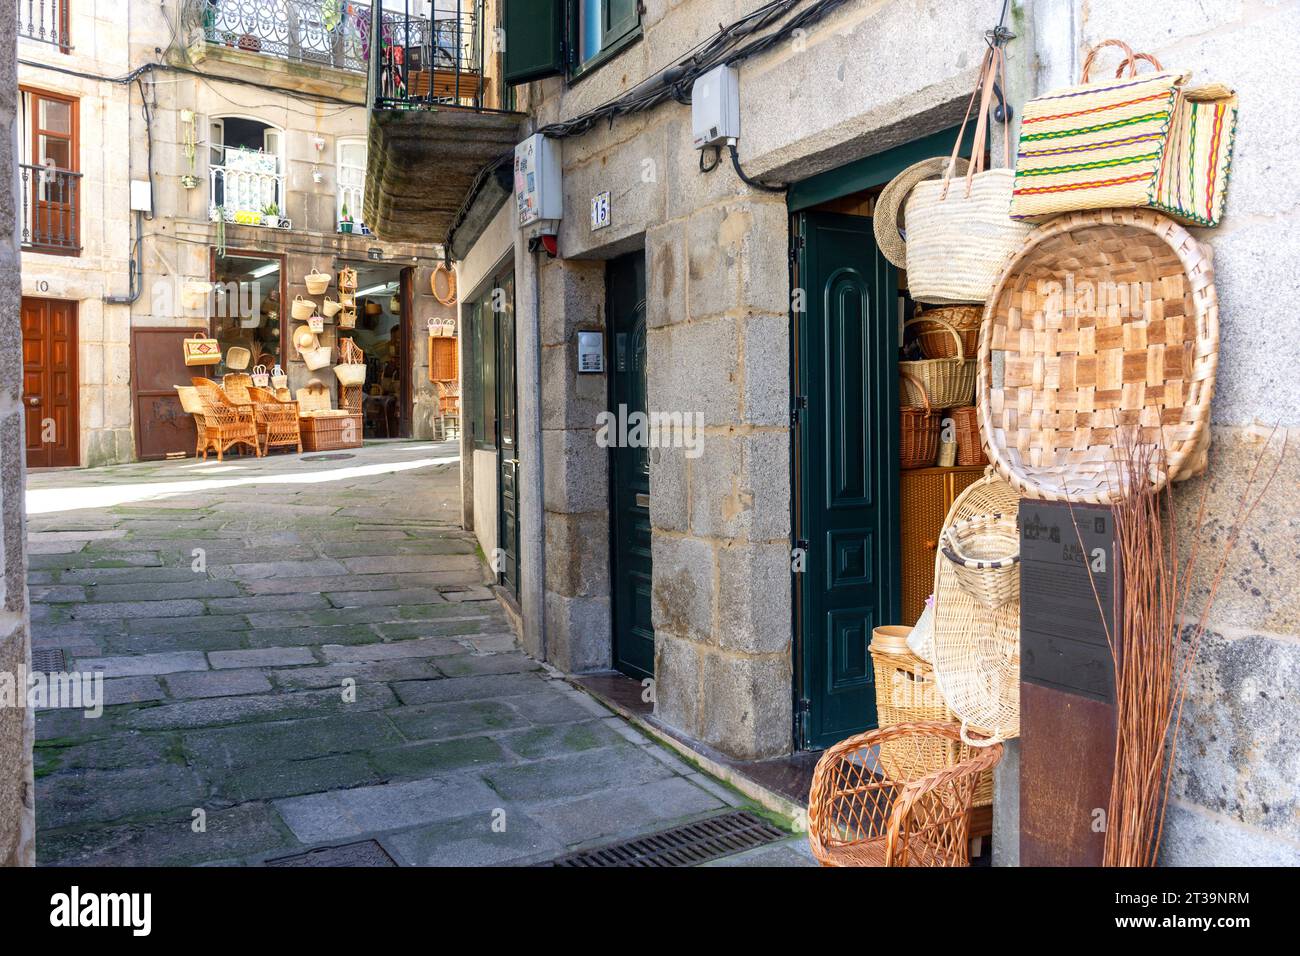 Wicker handicraft shops in Old Town, Vigo, Province of Pontevedra, Galicia, Kingdom of Spain Stock Photo